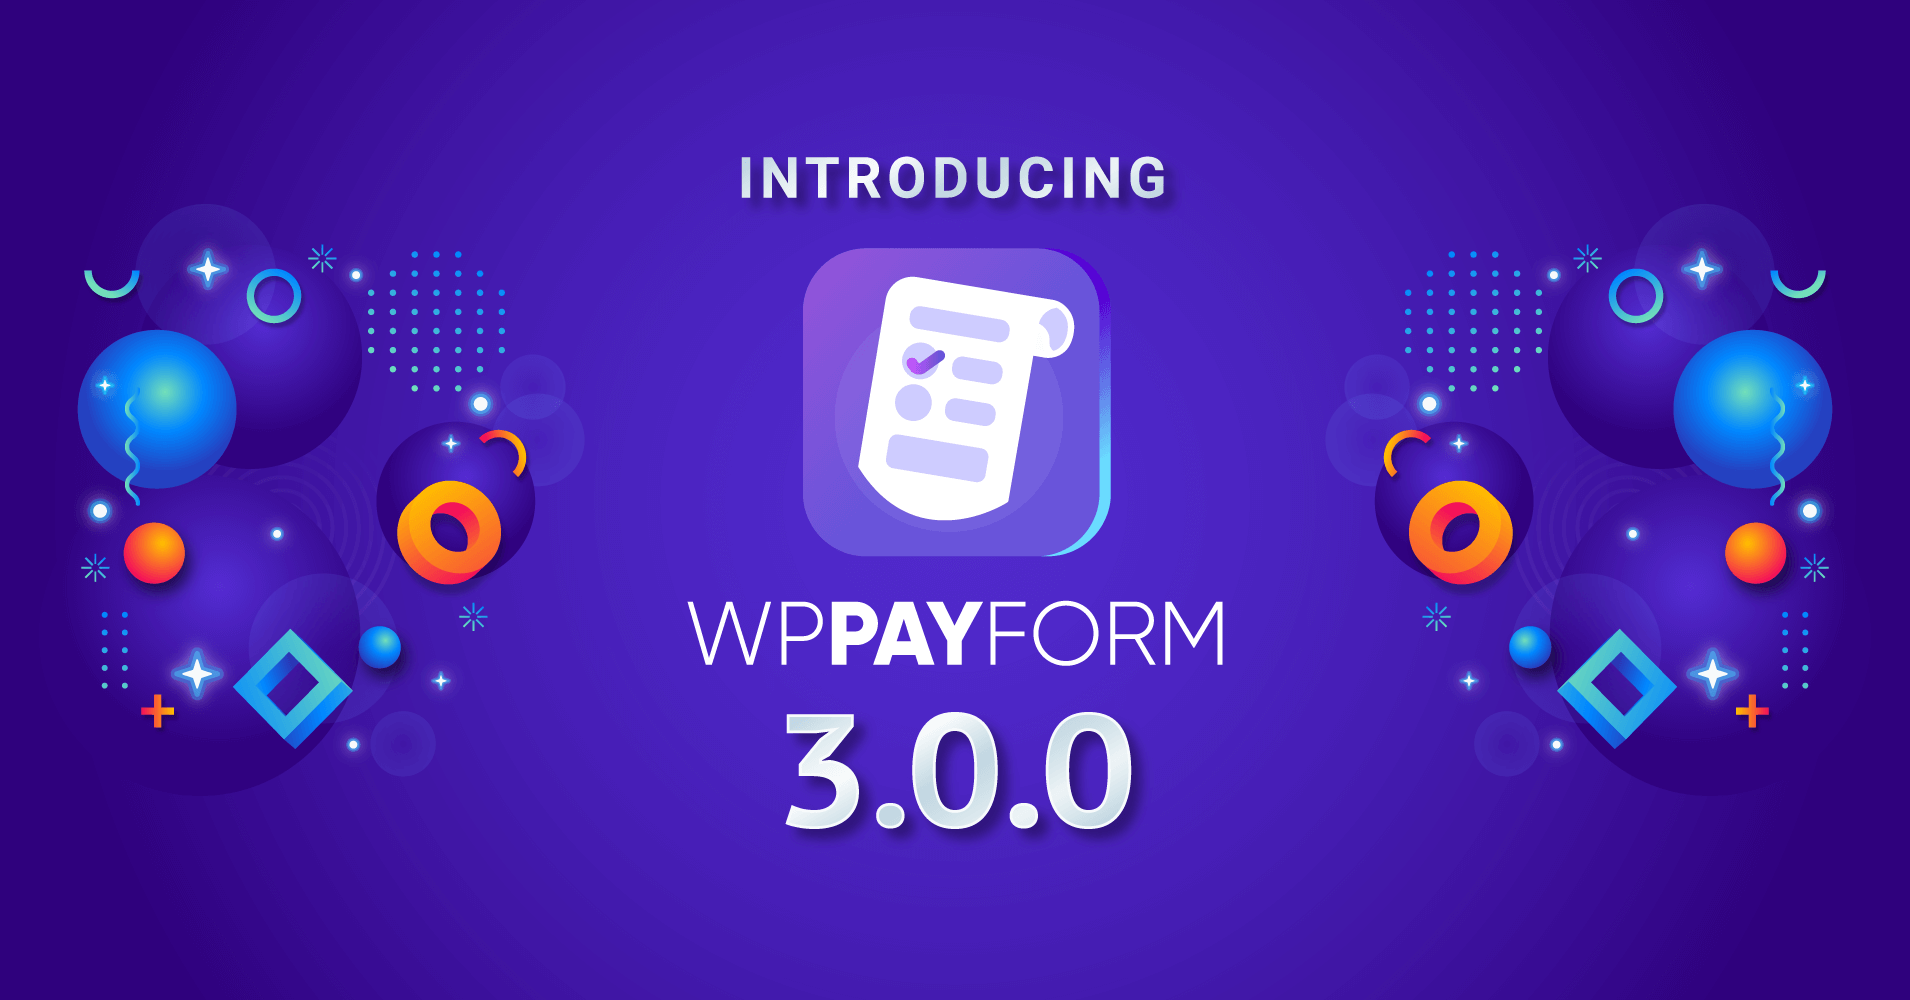 wppayform version update, wppayform product update, wppayform 3.0.0